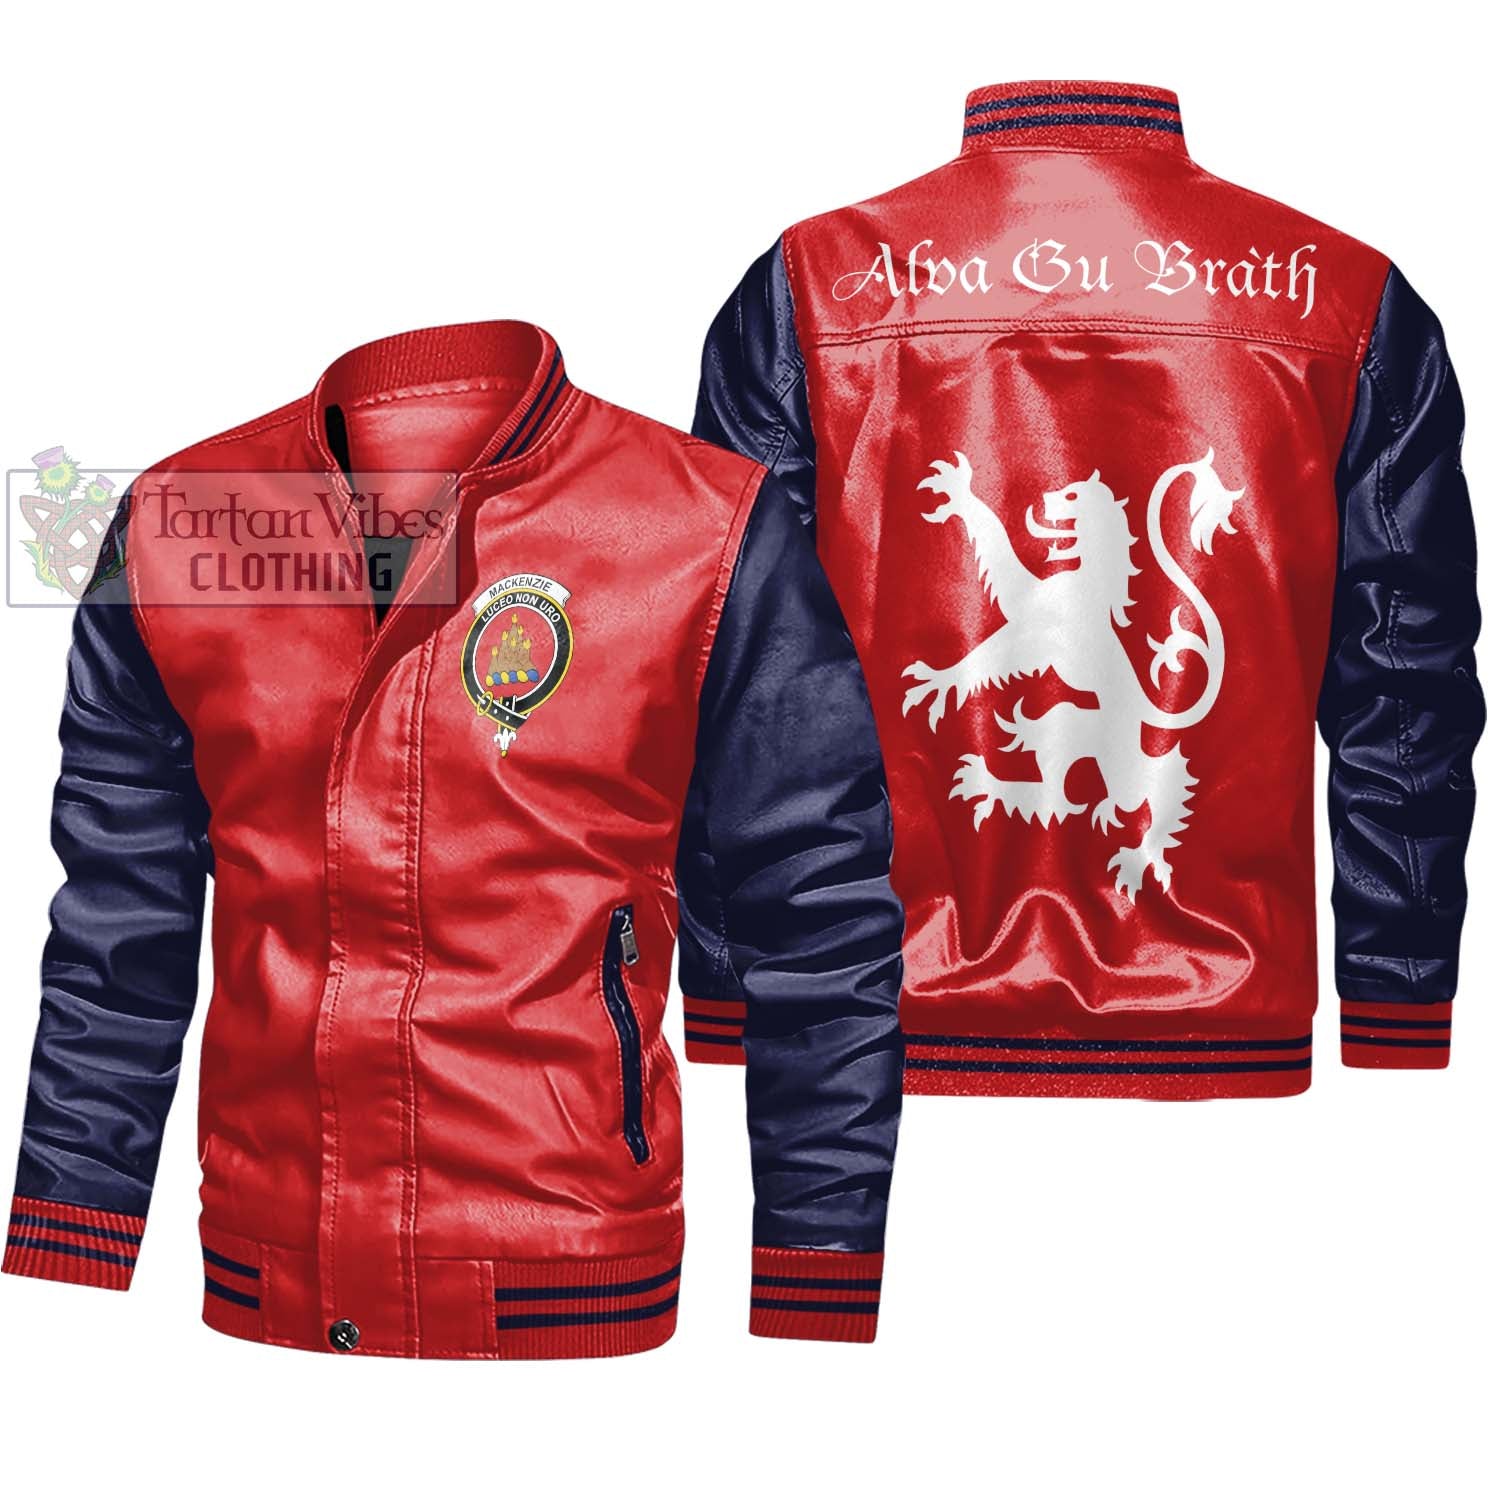 Tartan Vibes Clothing MacKenzie Family Crest Leather Bomber Jacket Lion Rampant Alba Gu Brath Style